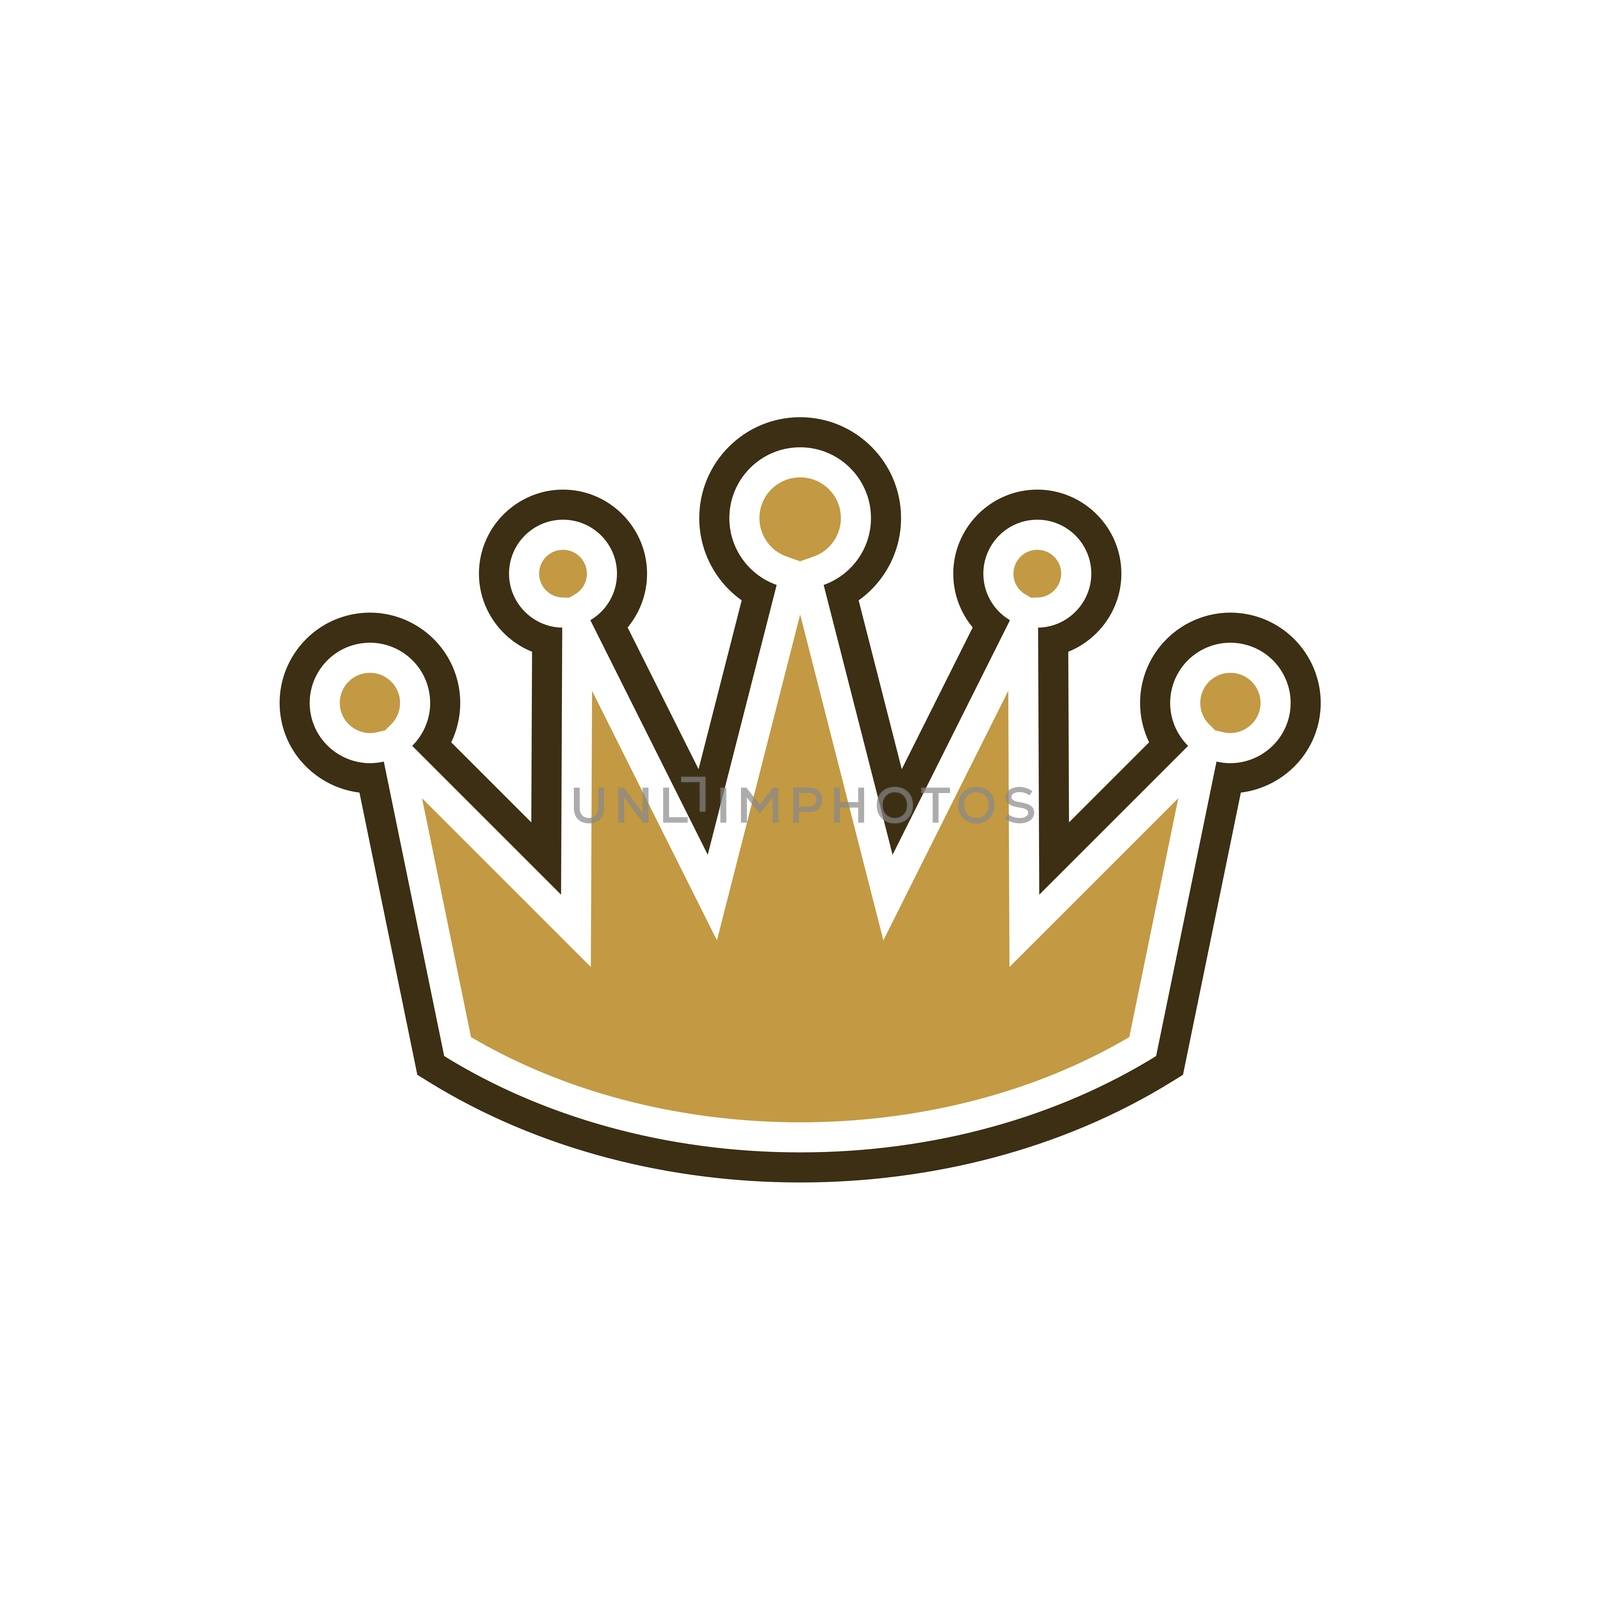 Simple Crown Logo Template Illustration Design. Vector EPS 10. by soponyono1